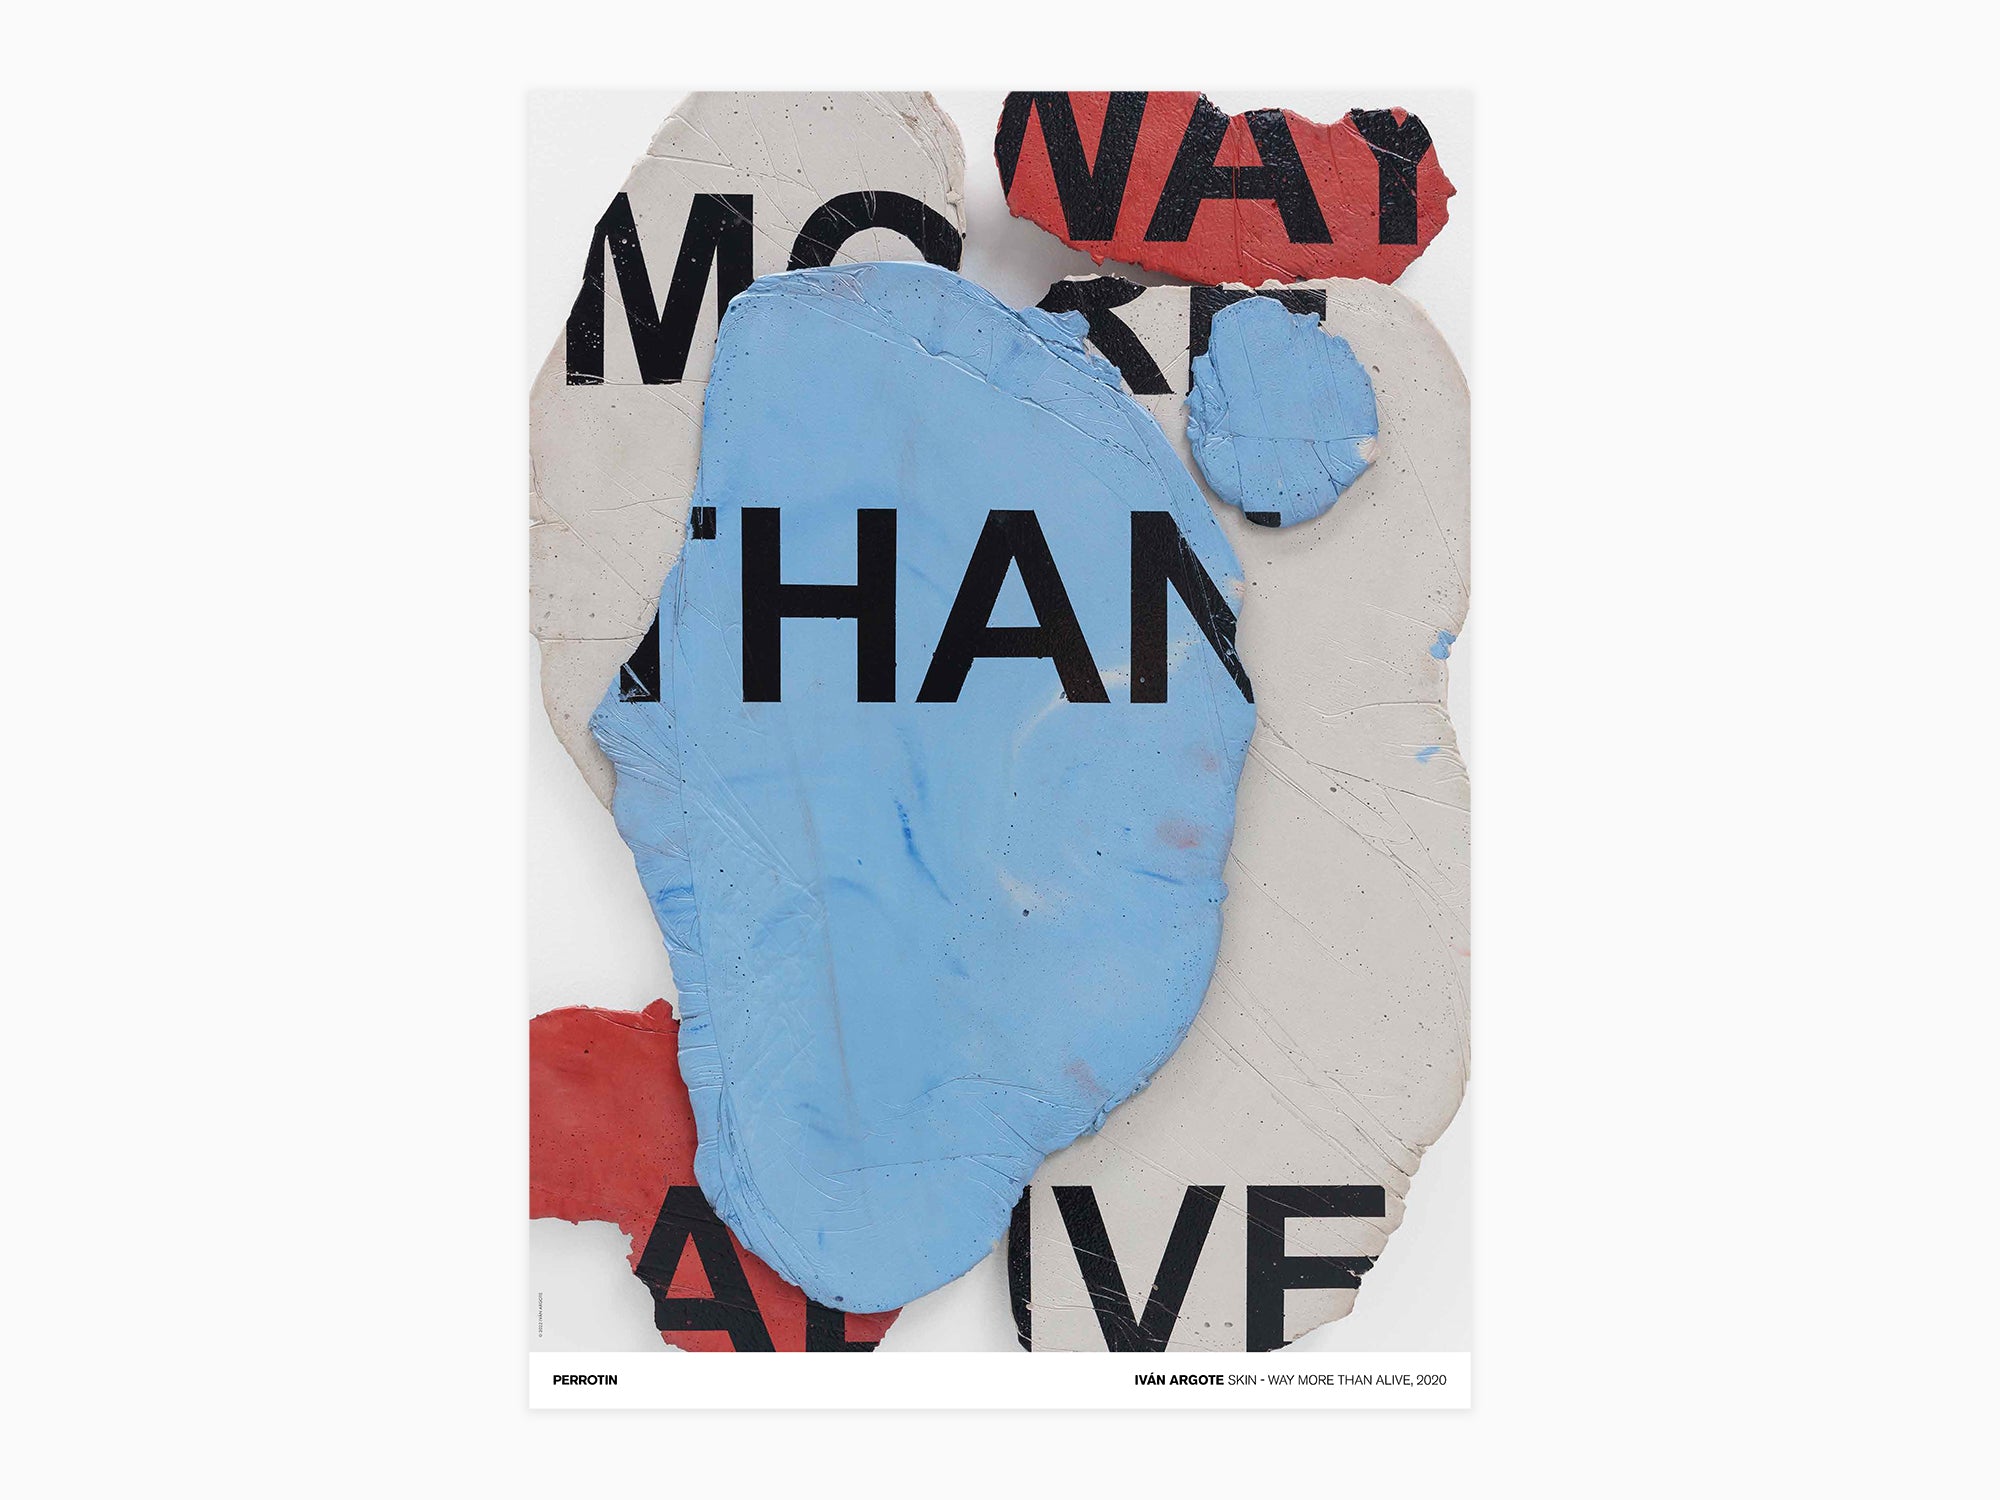 Ivan Argote - Skin - Way More Than Alive, 2020 (standard poster)